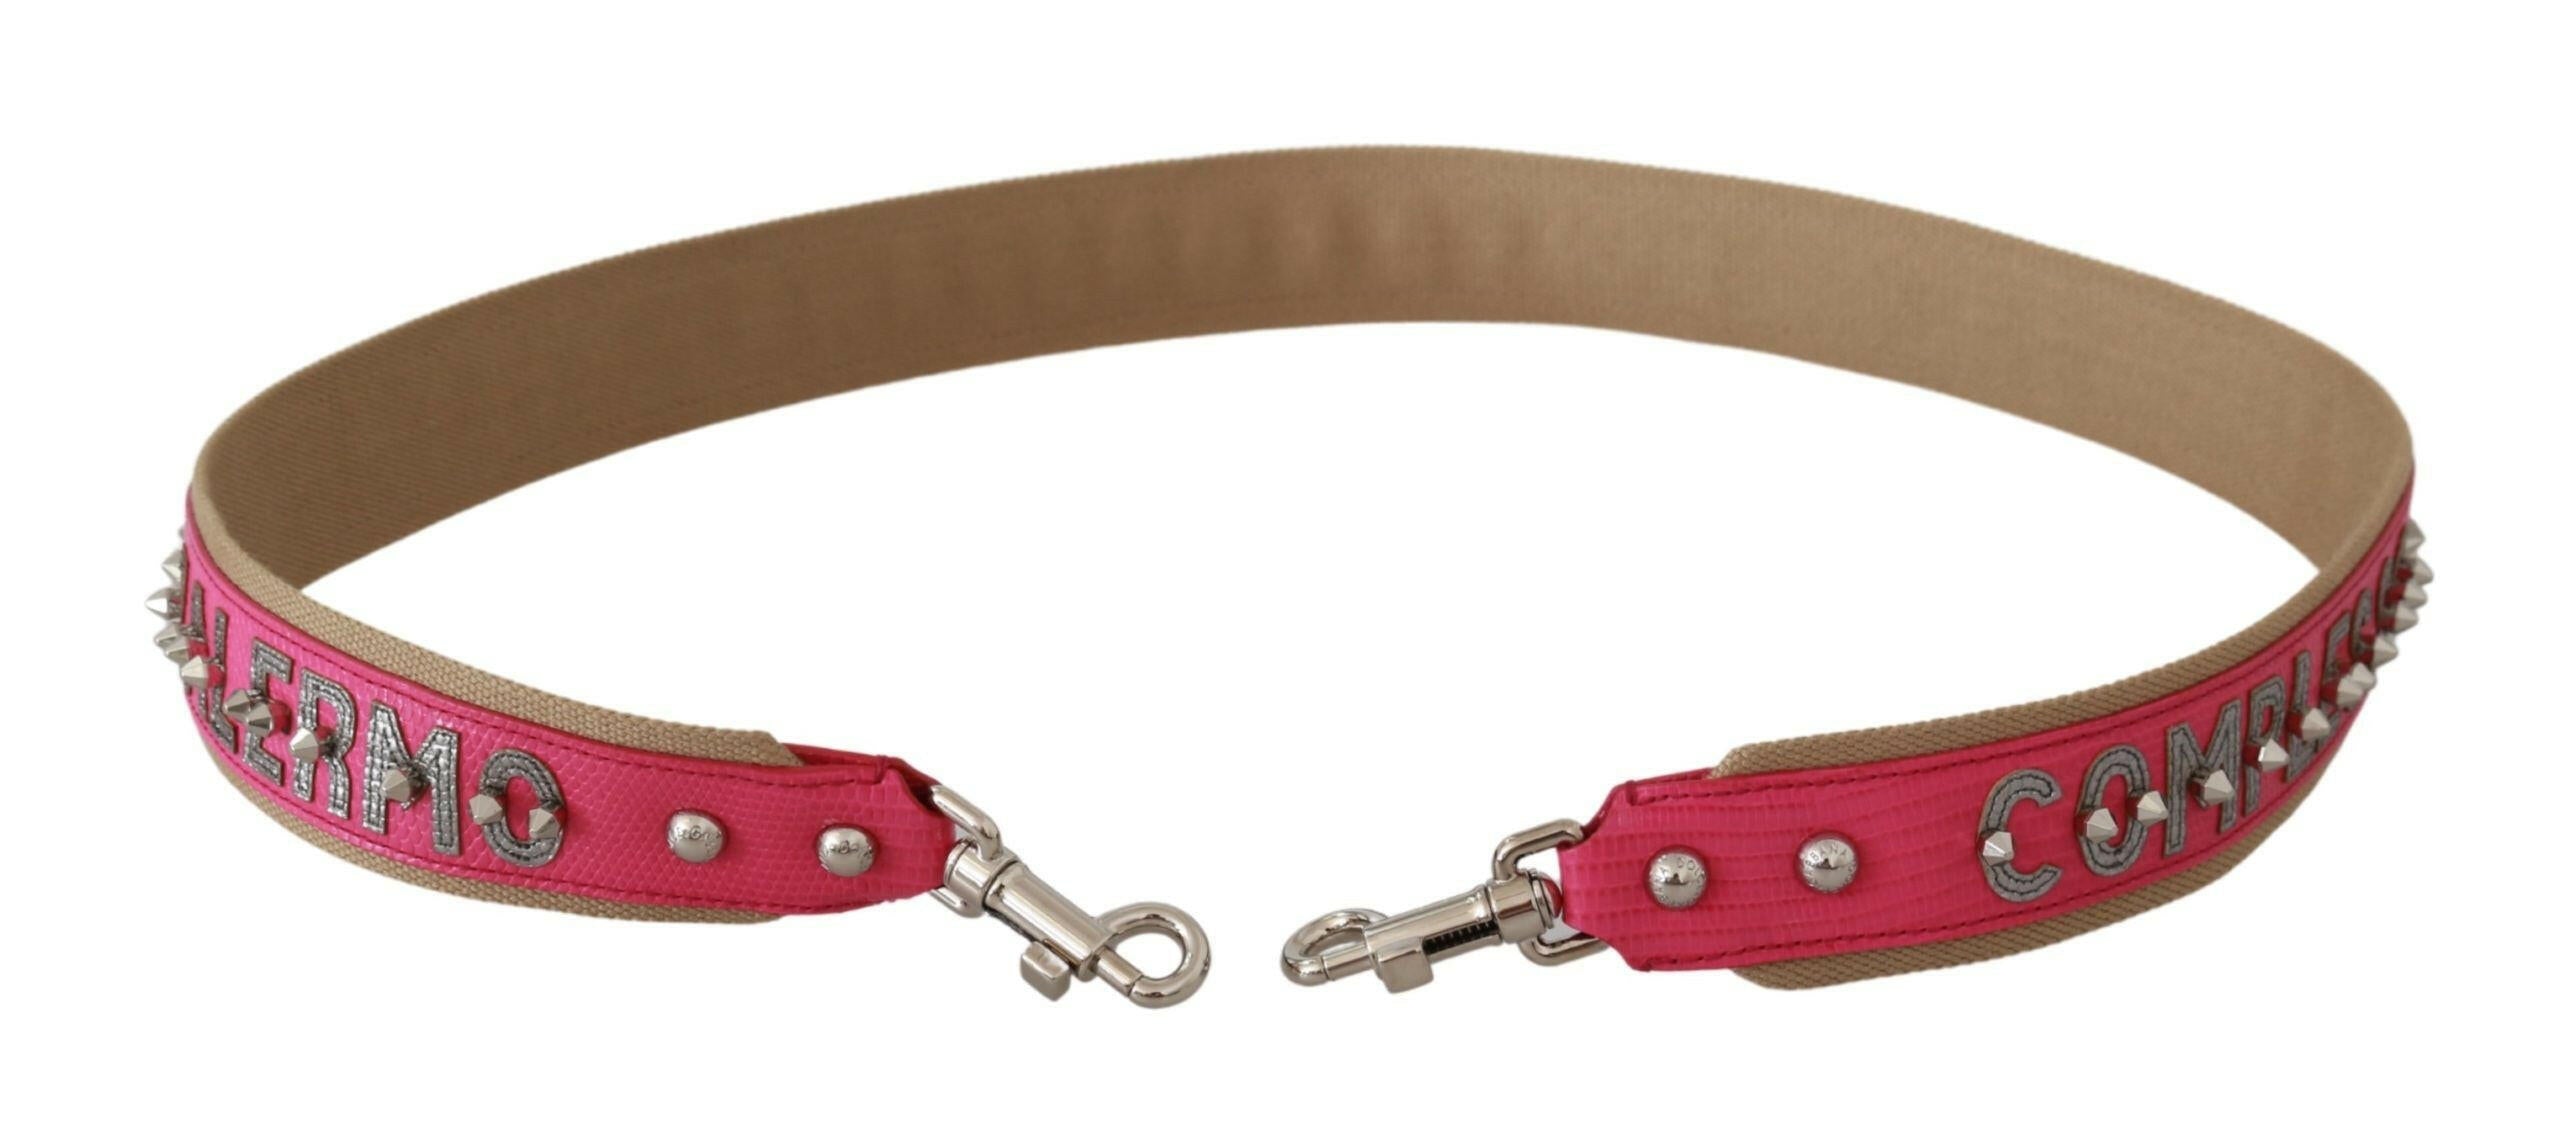 Dolce & Gabbana Pink Handbag Accessory Leather Shoulder Strap - GENUINE AUTHENTIC BRAND LLC  